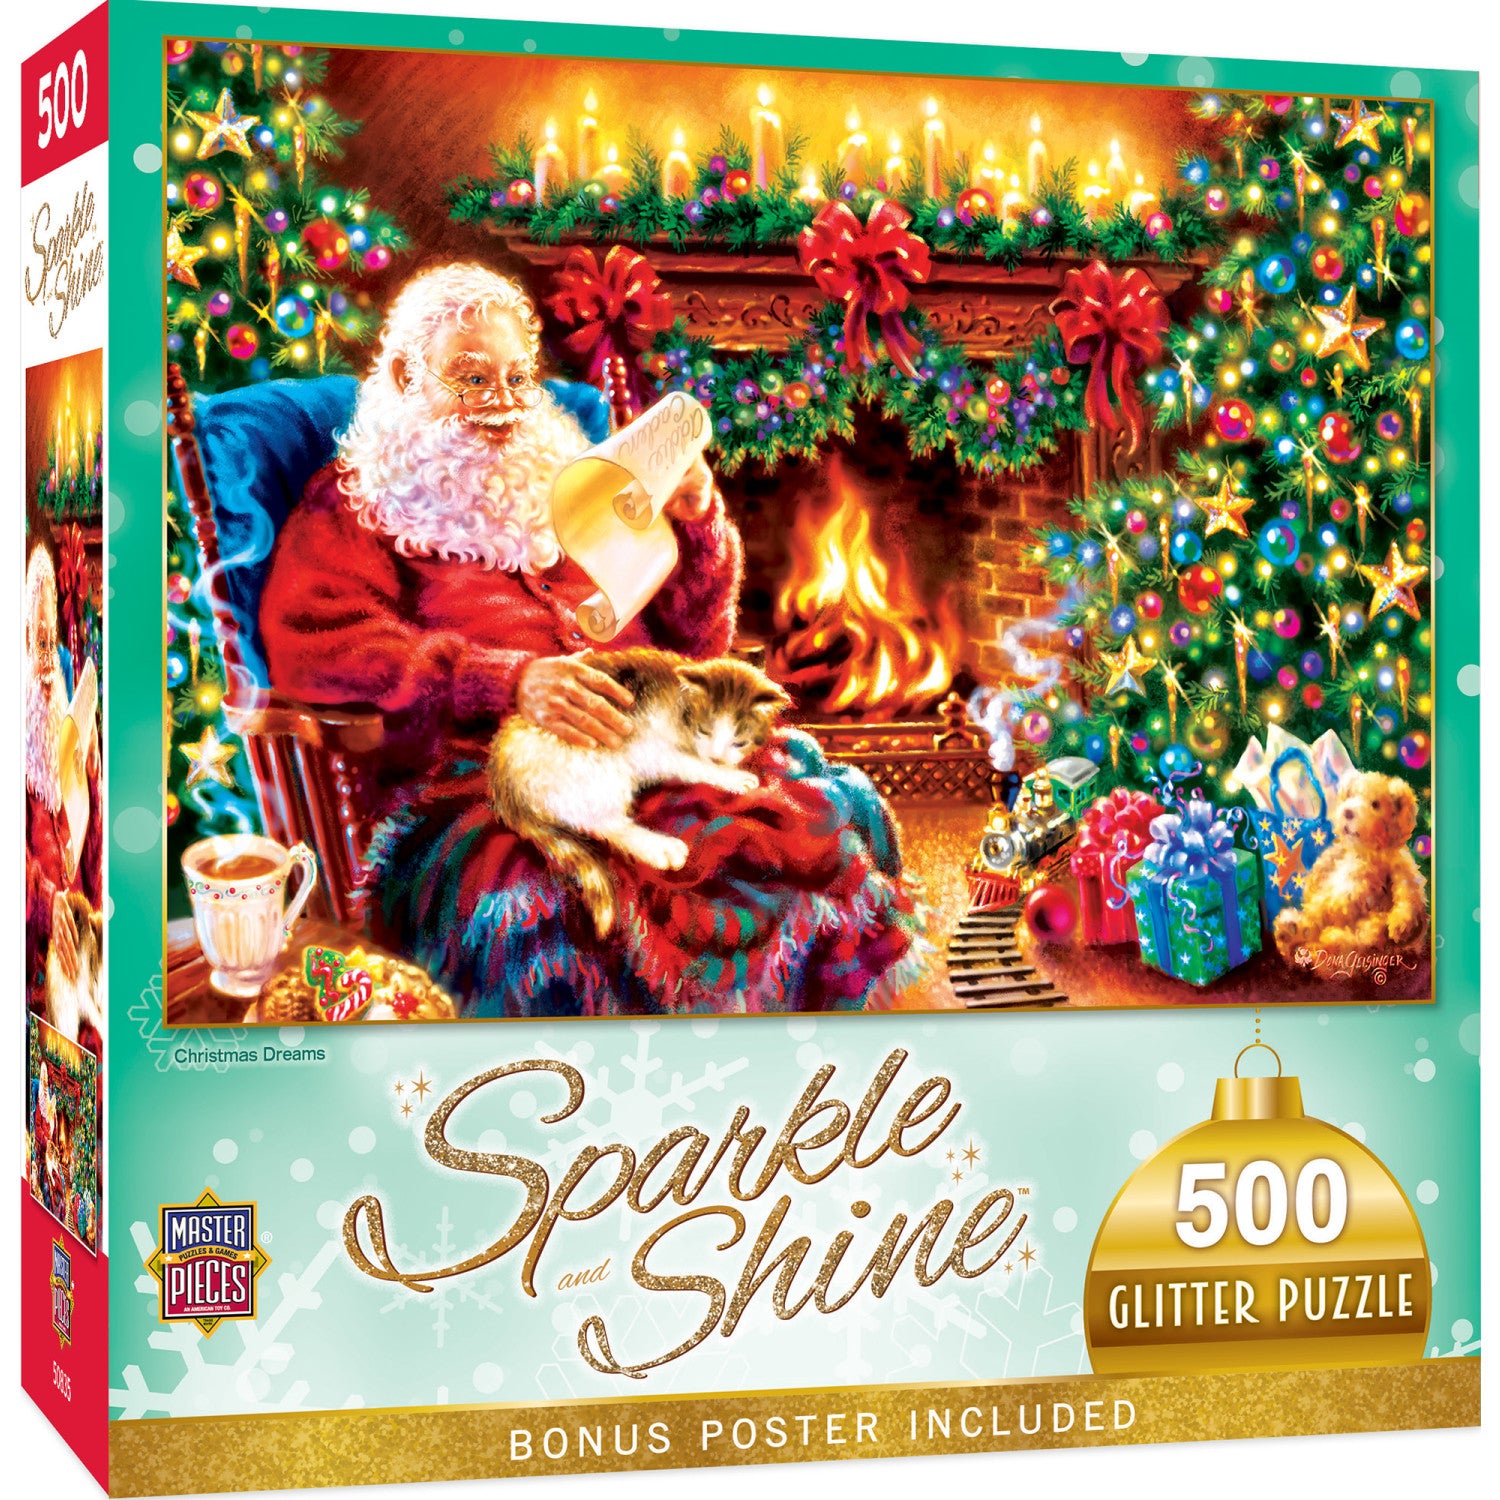 Sparkle & Shine - Christmas Dreams 500 Piece Glitter Puzzle